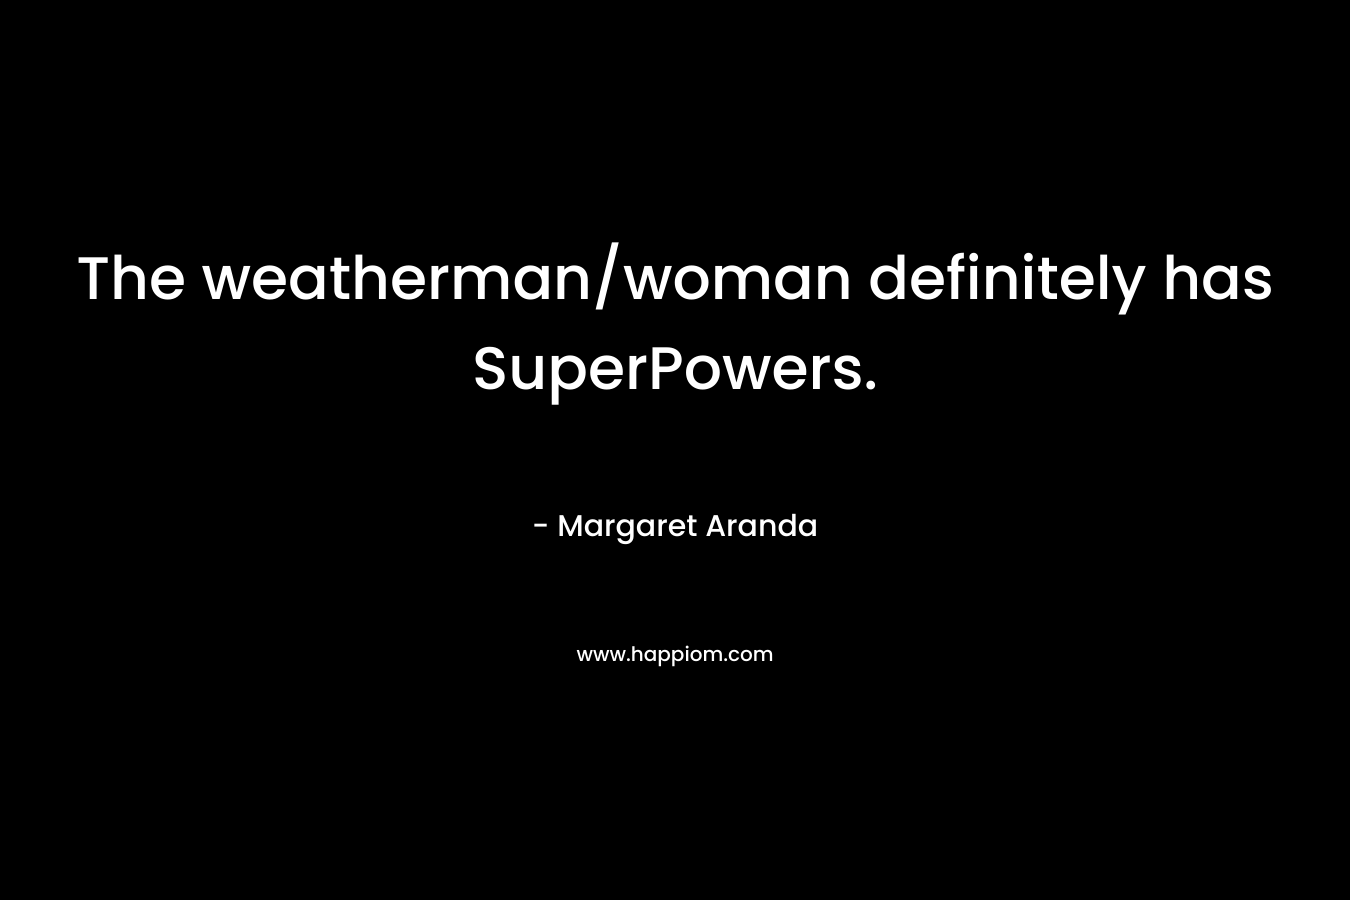 The weatherman/woman definitely has SuperPowers.